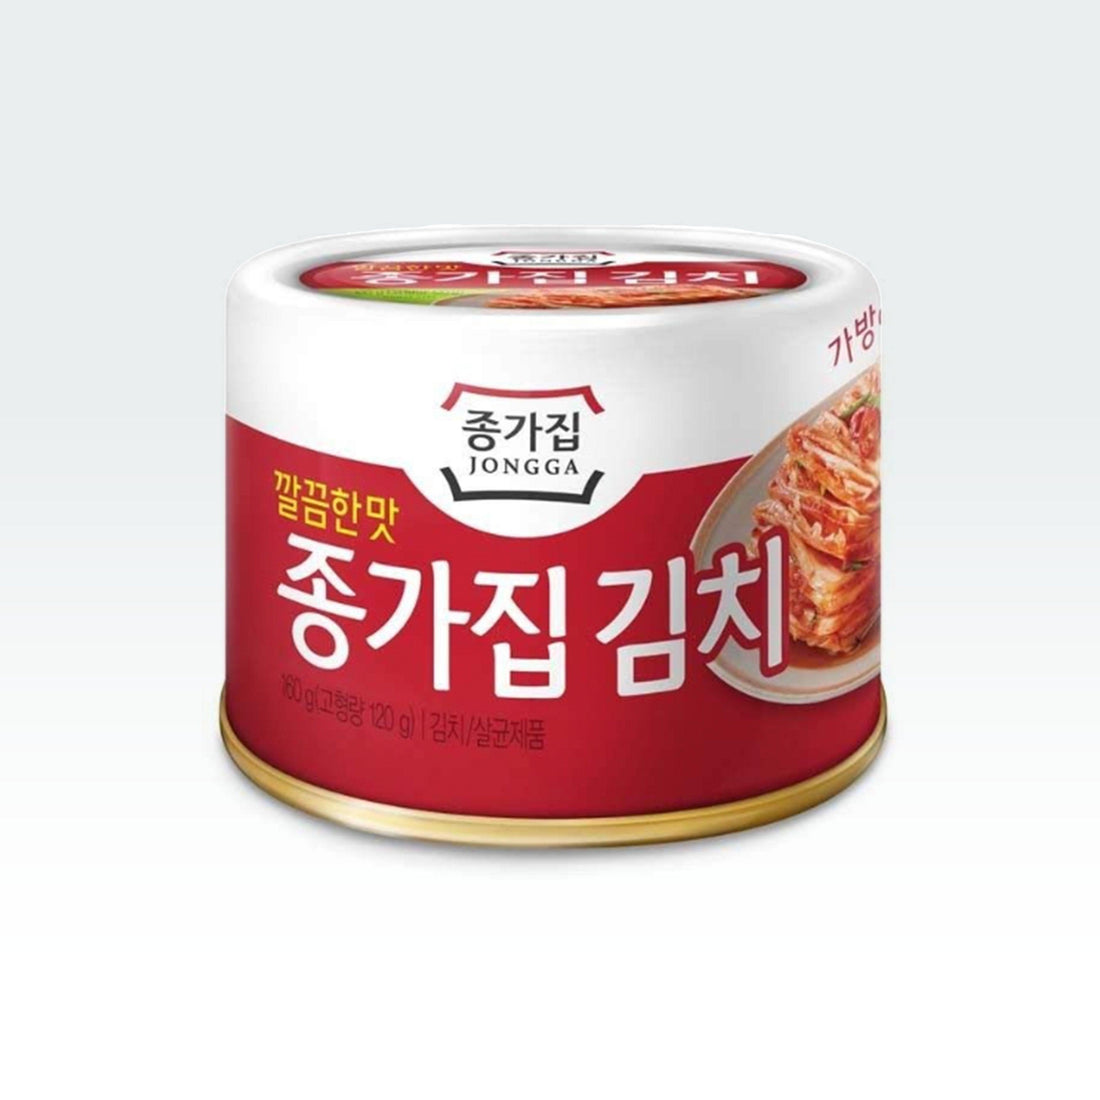 Chongga Canned Kimchi (Sliced) 5.64oz(160g) - Anytime Basket